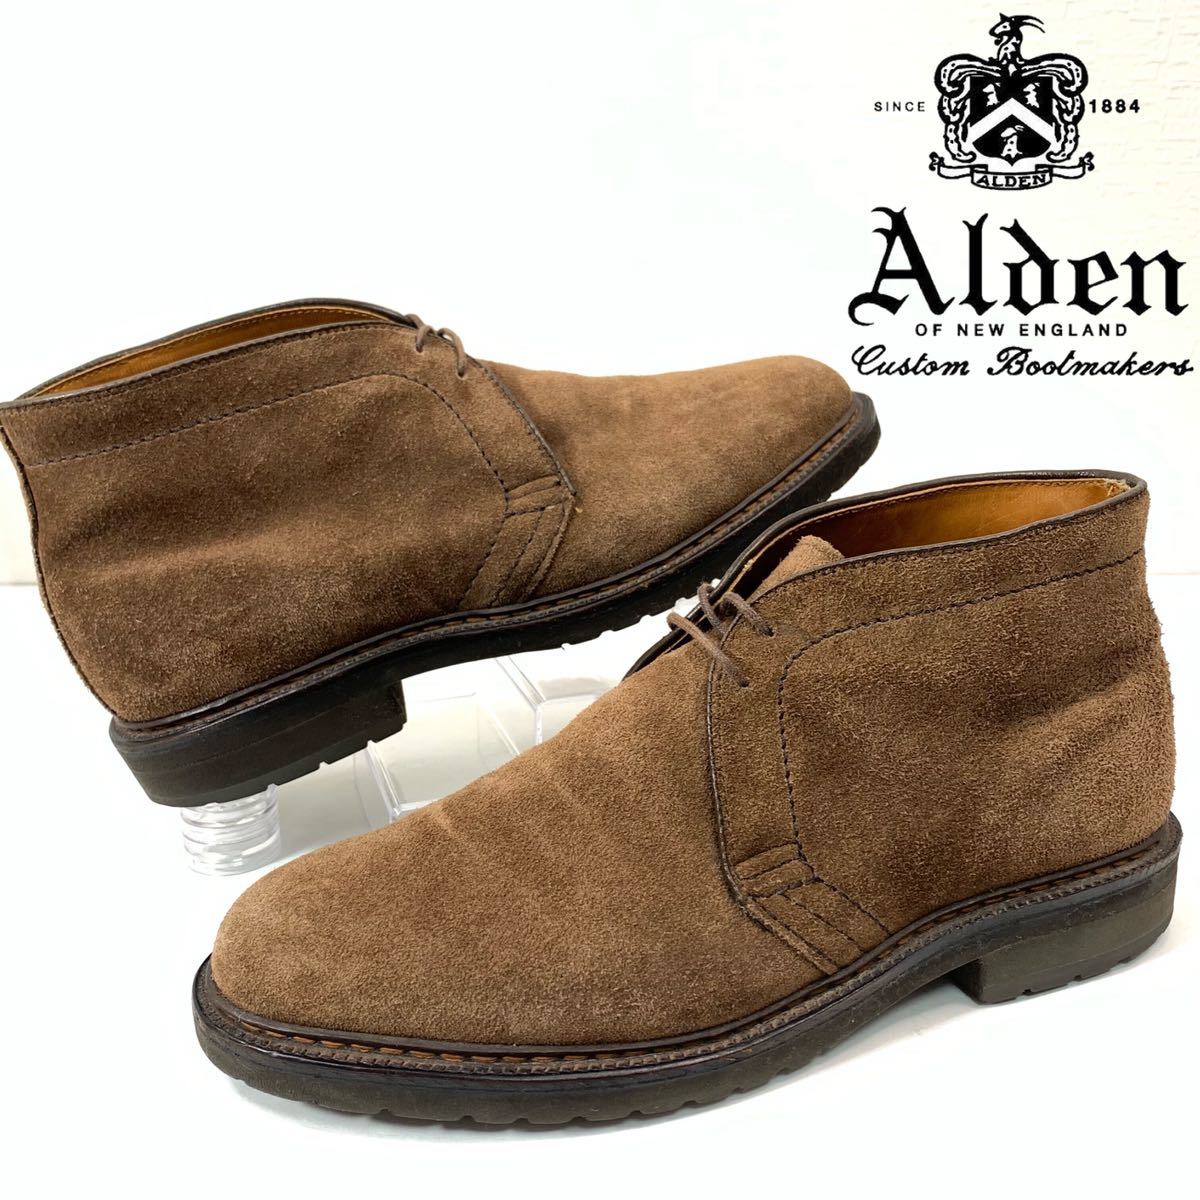 ALDEN オールデン チャッカブーツ 革靴 ブーツ スエードレザー バリー